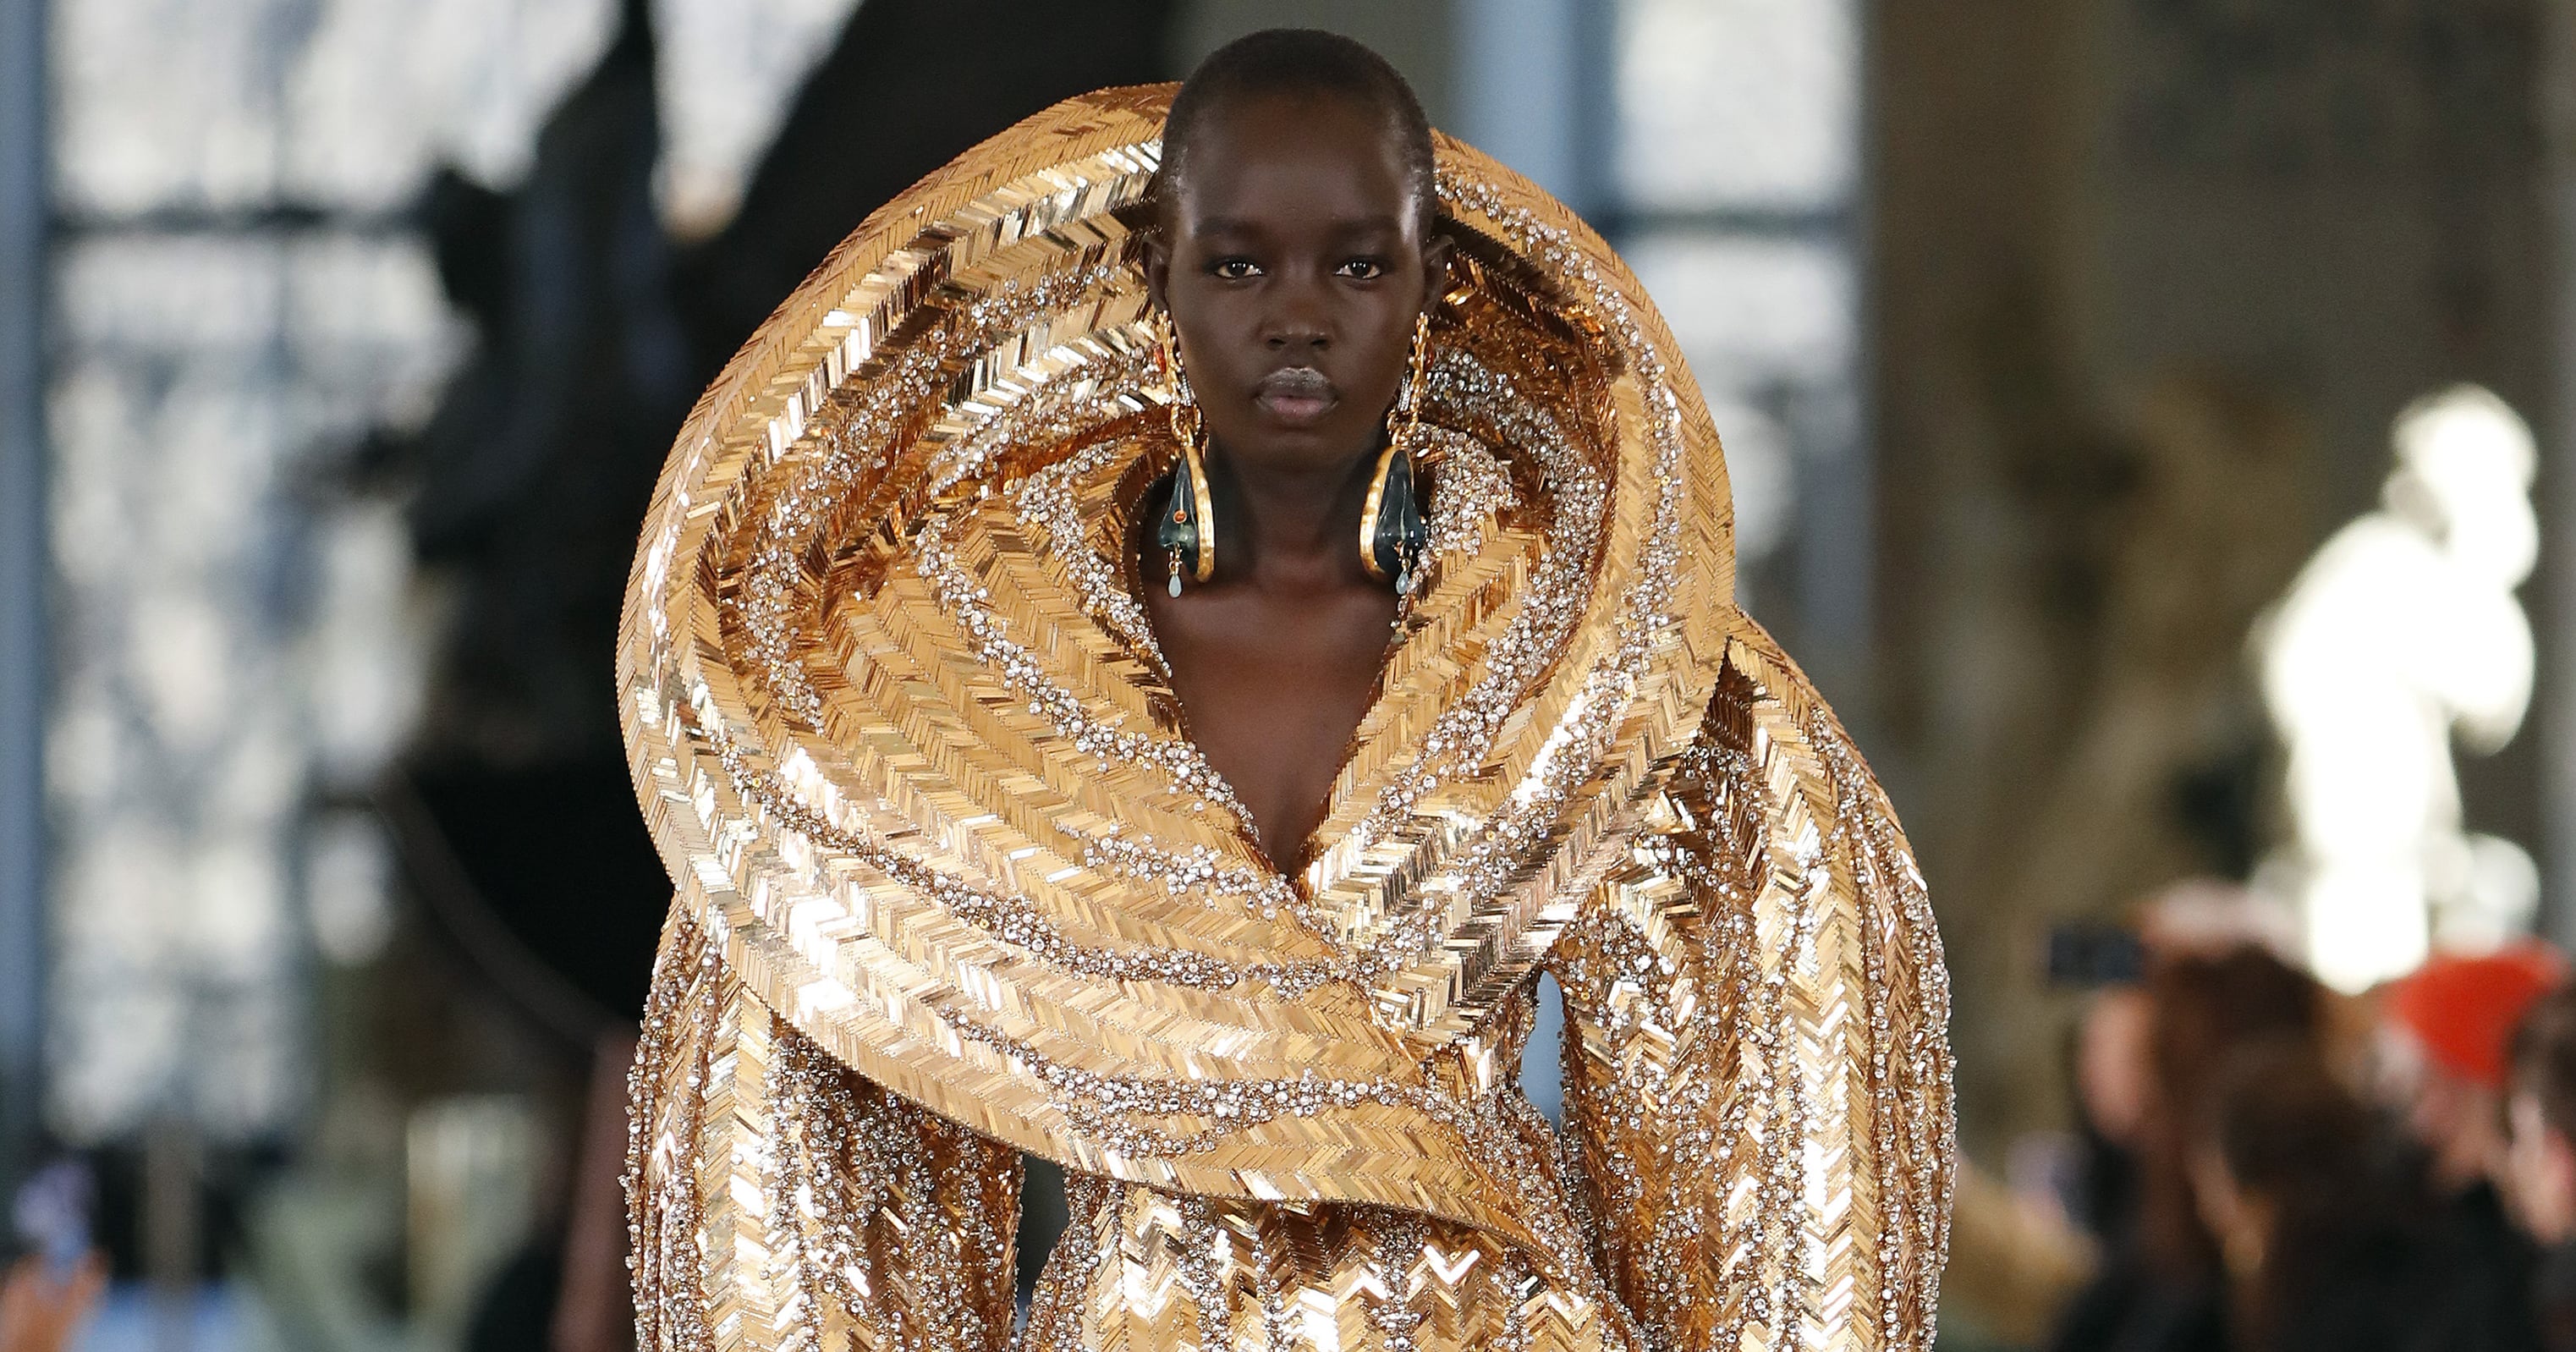 Schiaparelli Spring 2022 Couture Show Pictures and Recap | POPSUGAR Fashion